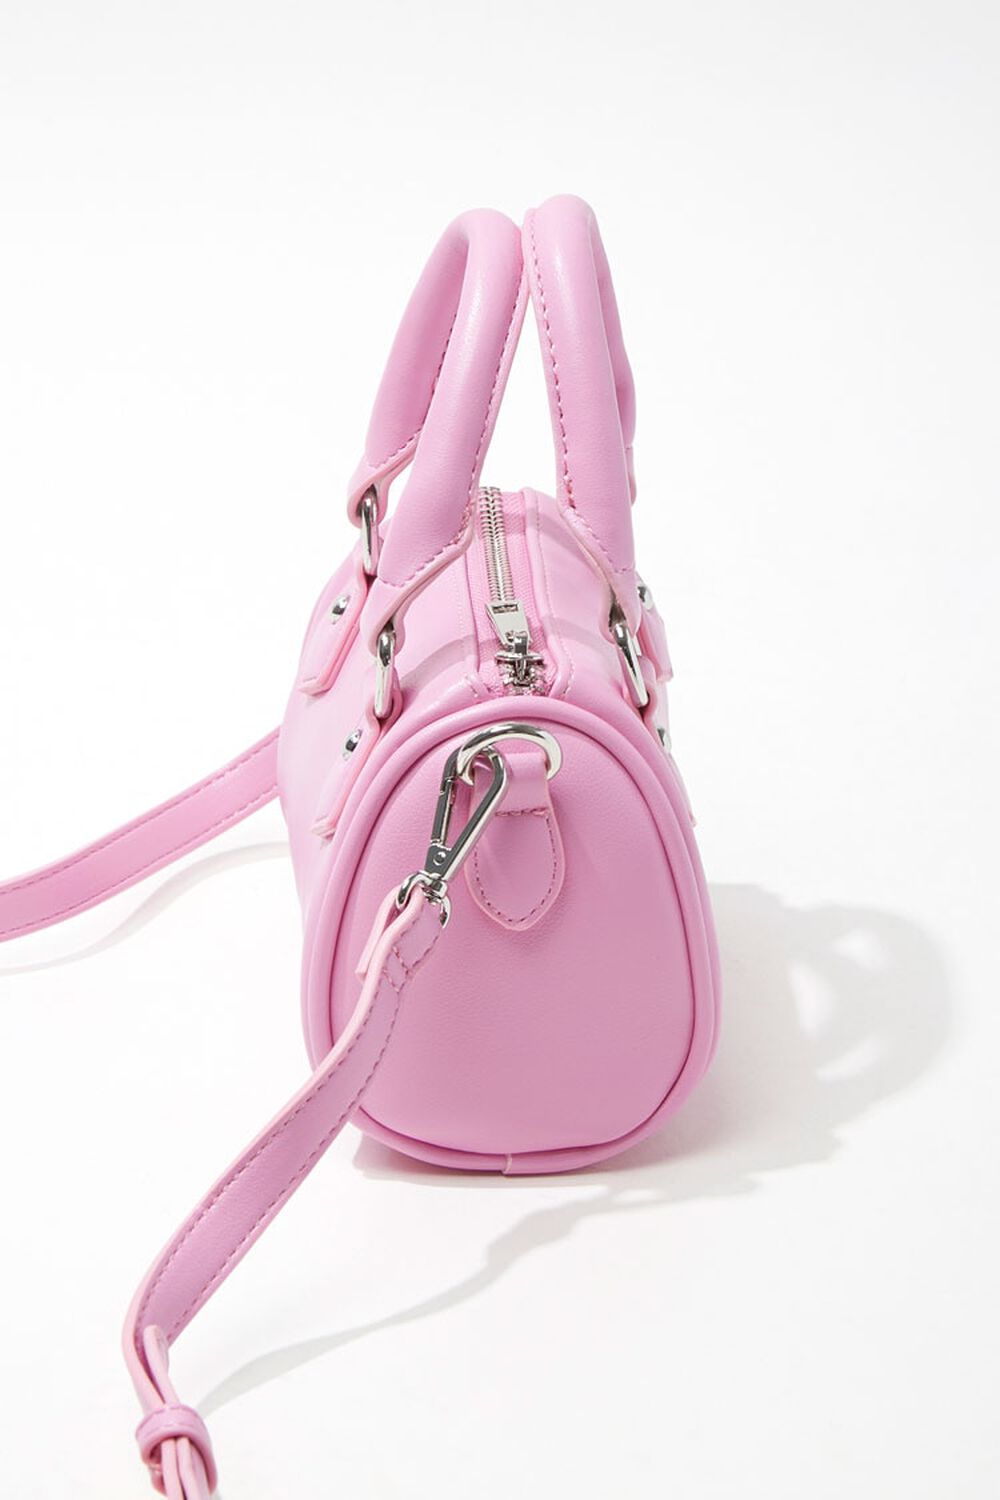 PINK Convertible Zip-Top Crossbody Bag, image 3